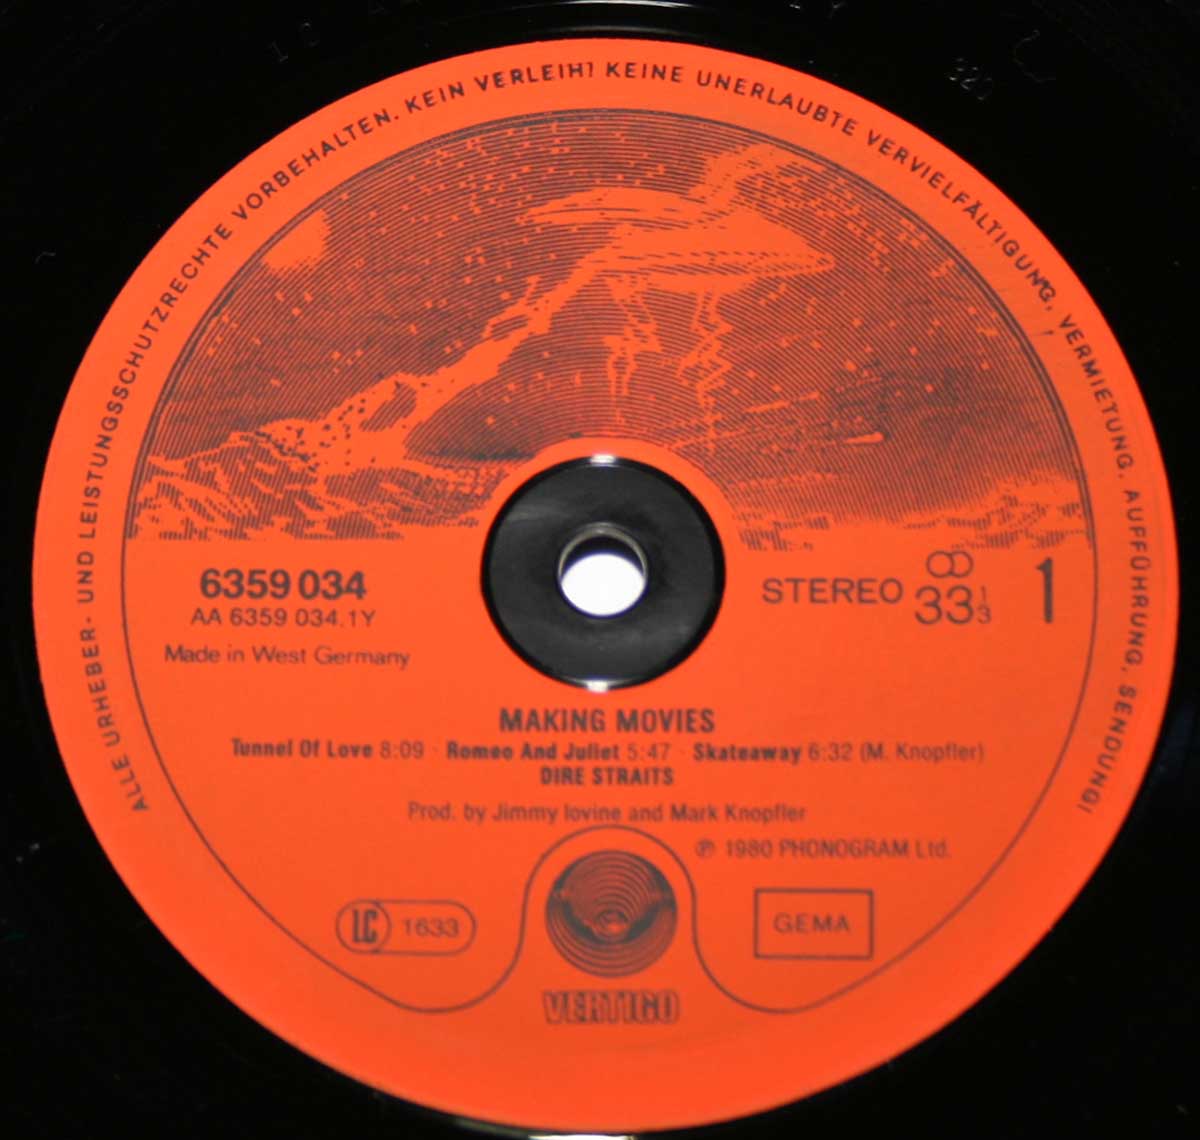 Close-up Photo of the Red/Orange Vertigo Record Label of Making Movies  